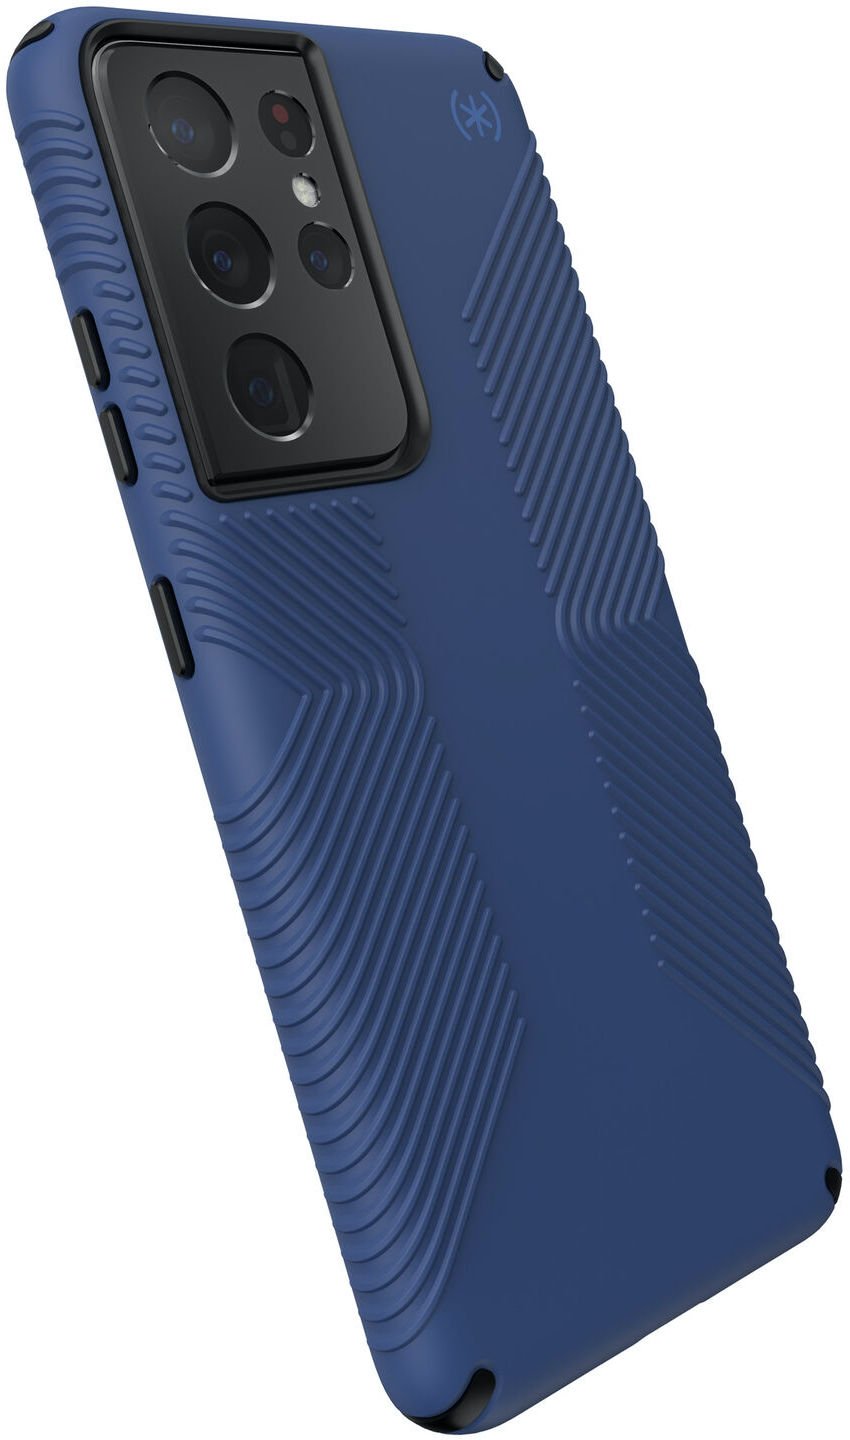 Speck Presido2 Grip Samsung Galaxy S21 Ultra Case